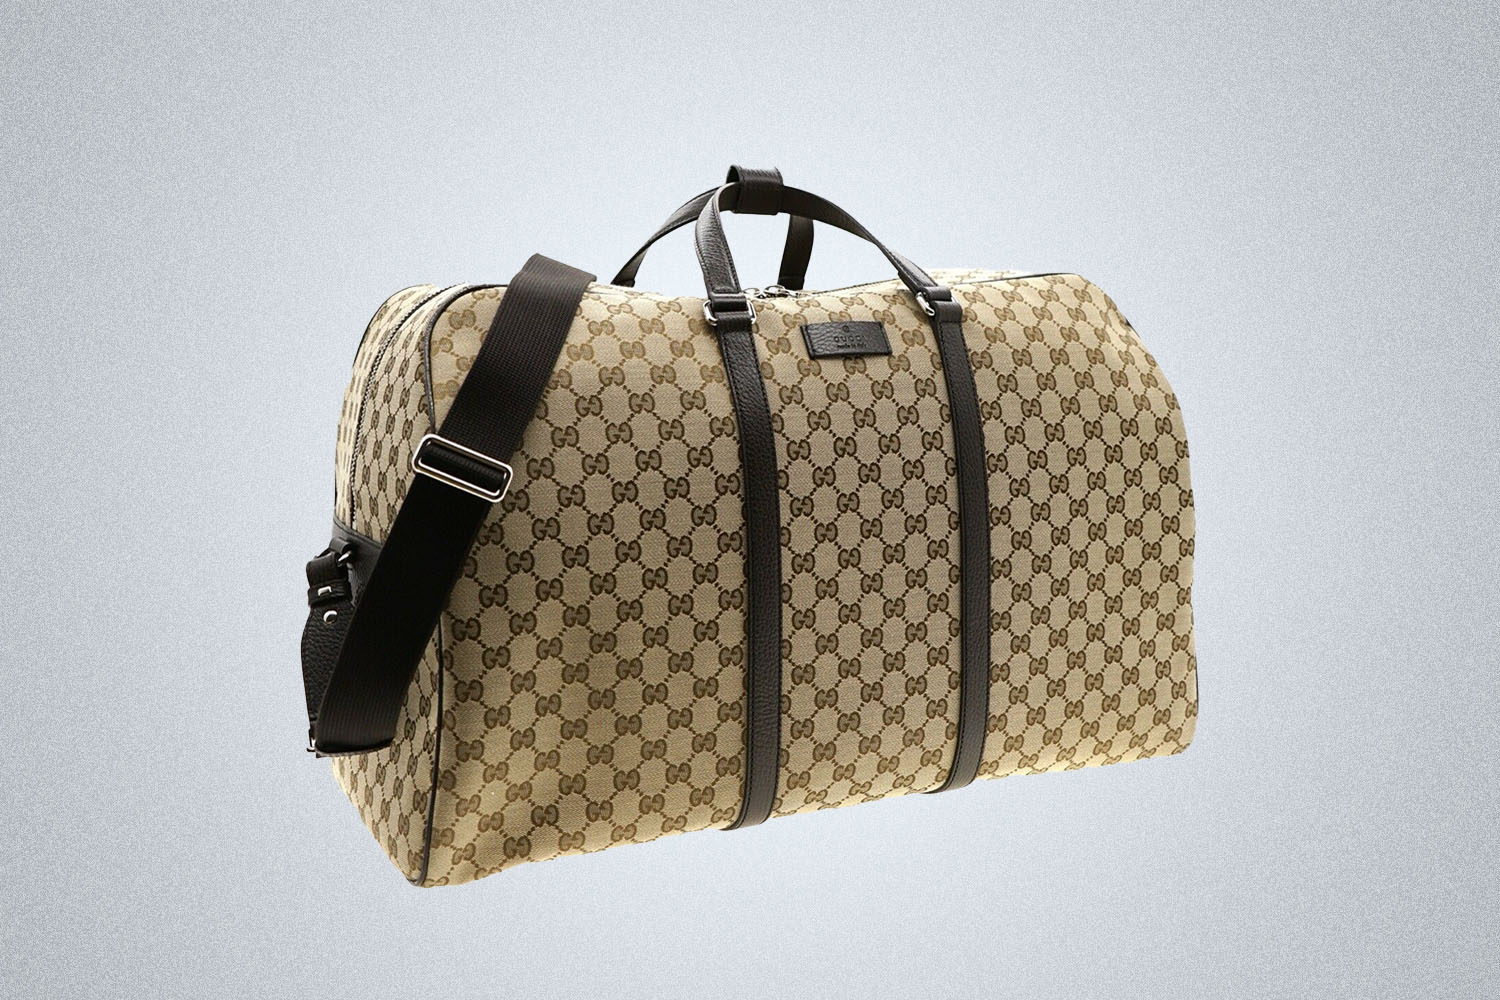 A Gucci duffle bag on a grey background 